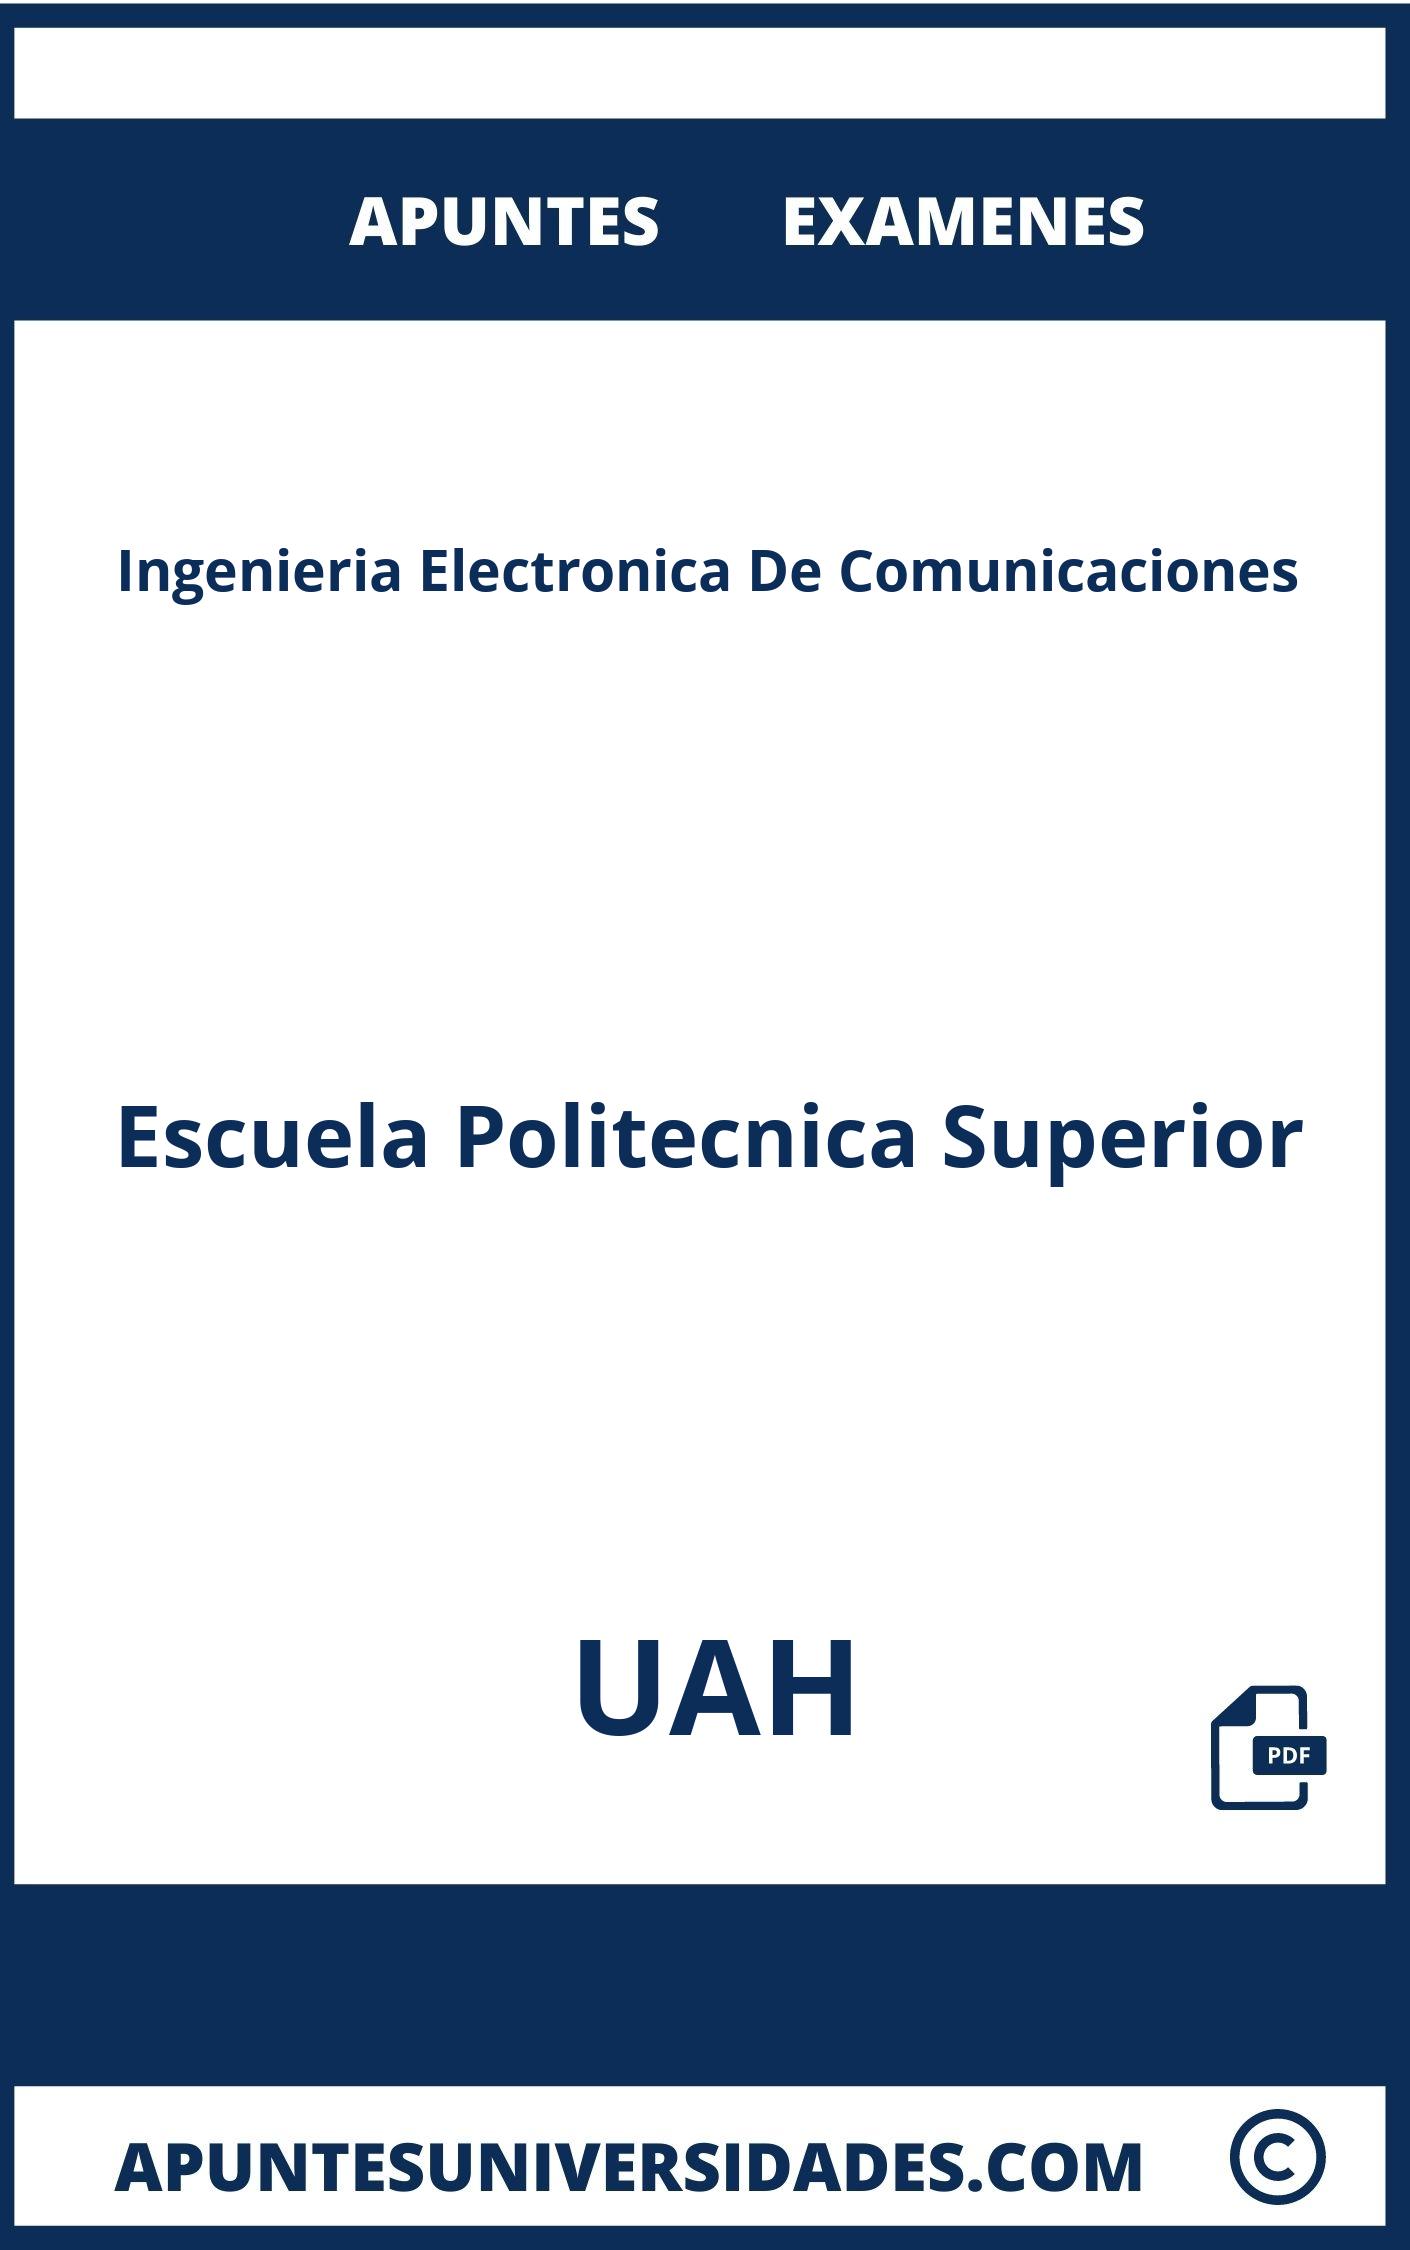 Apuntes Examenes Ingenieria Electronica De Comunicaciones UAH